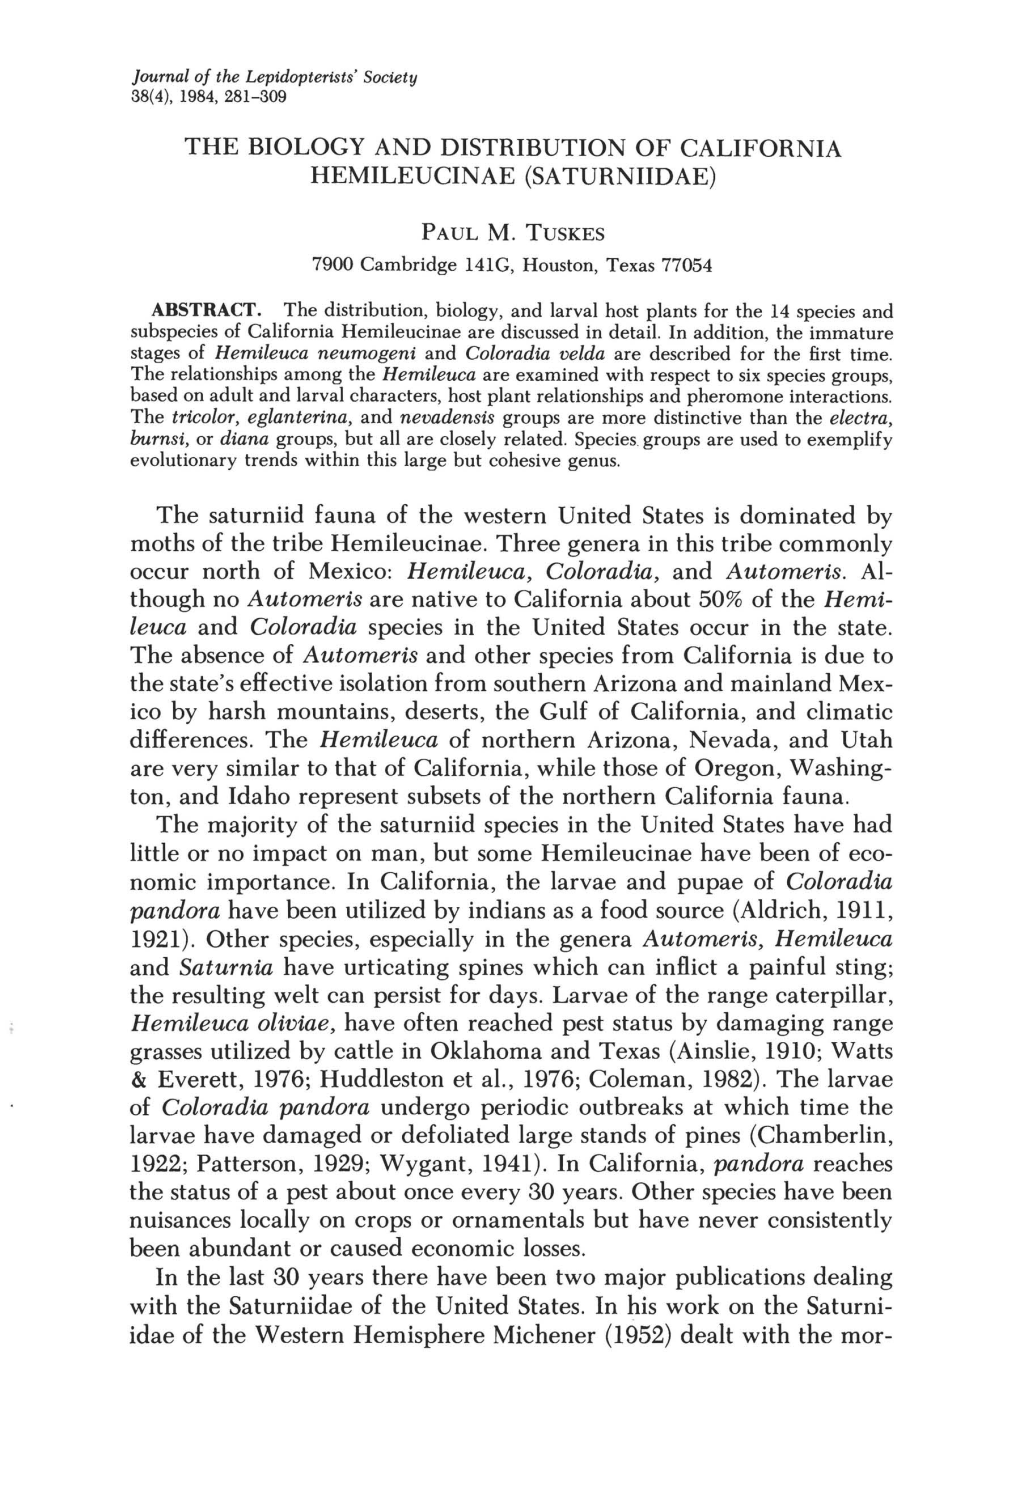 The Biology and Distribution of California Hemileucinae (Saturniidae)